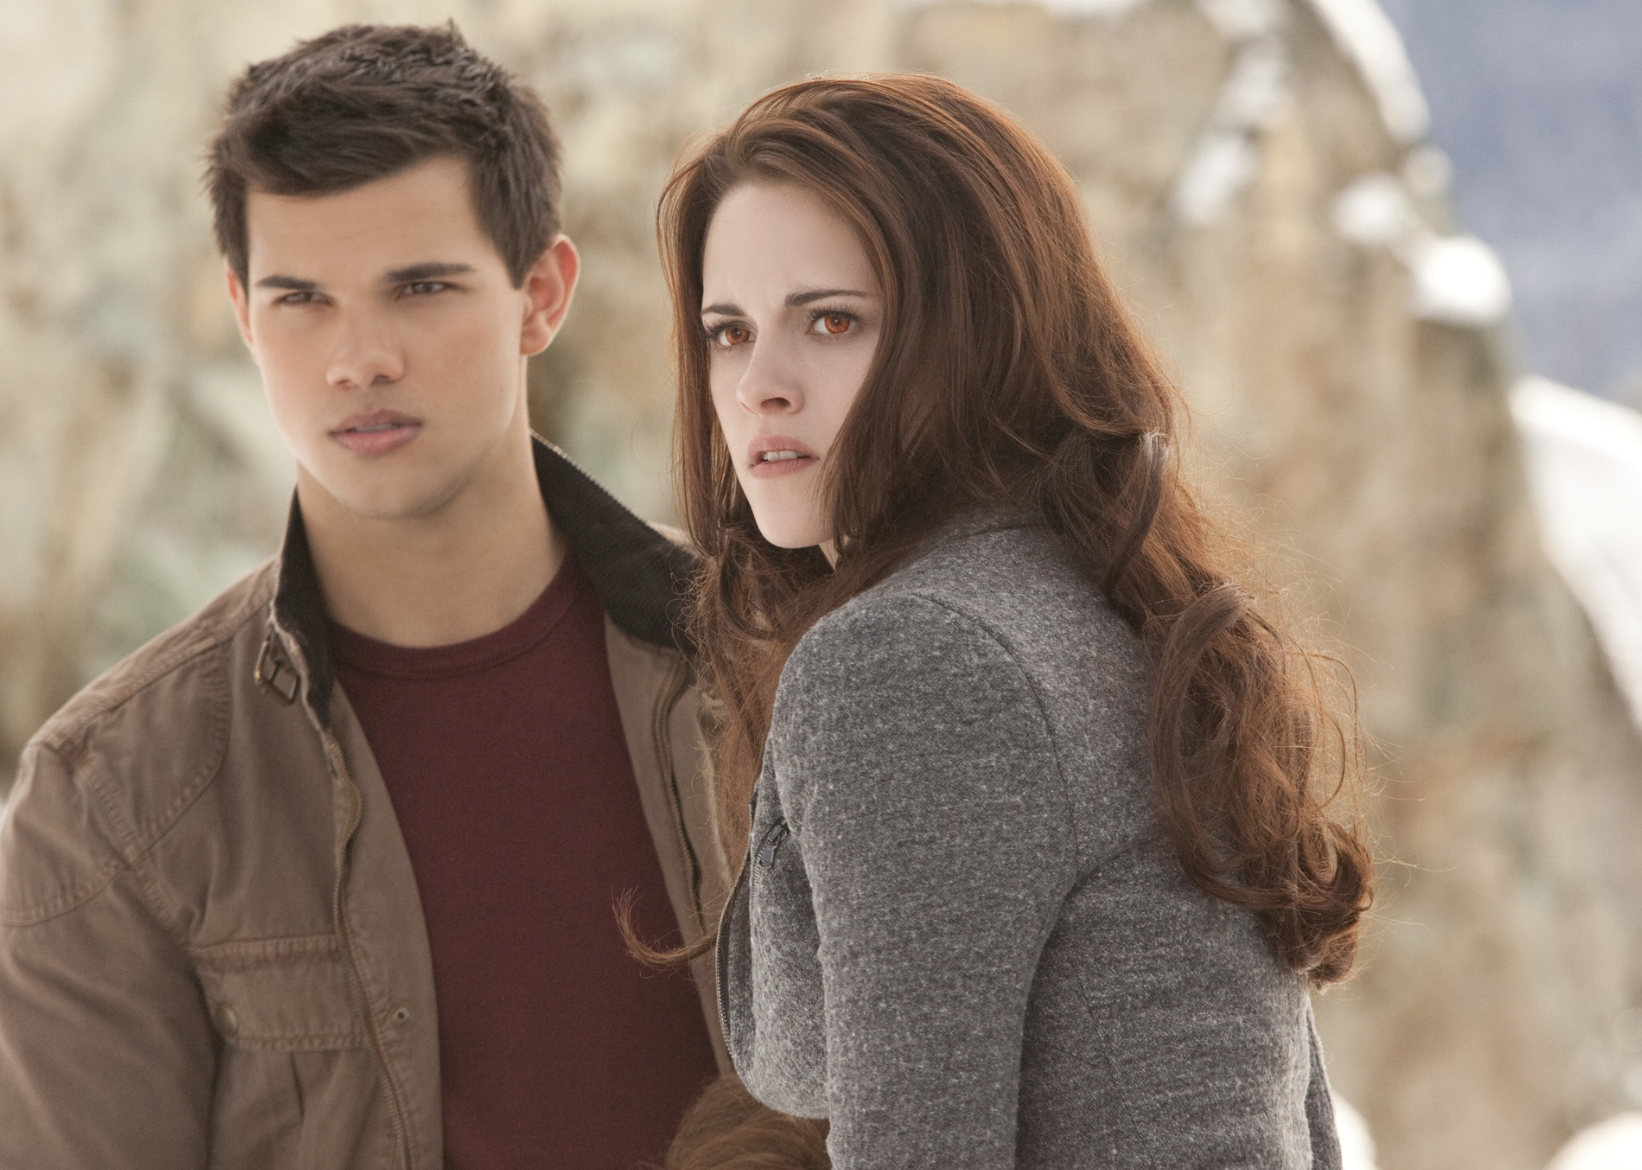 Kristen Stewart and Taylor Lautner in "The Twilight Saga: Breaking Dawn - Part 2"